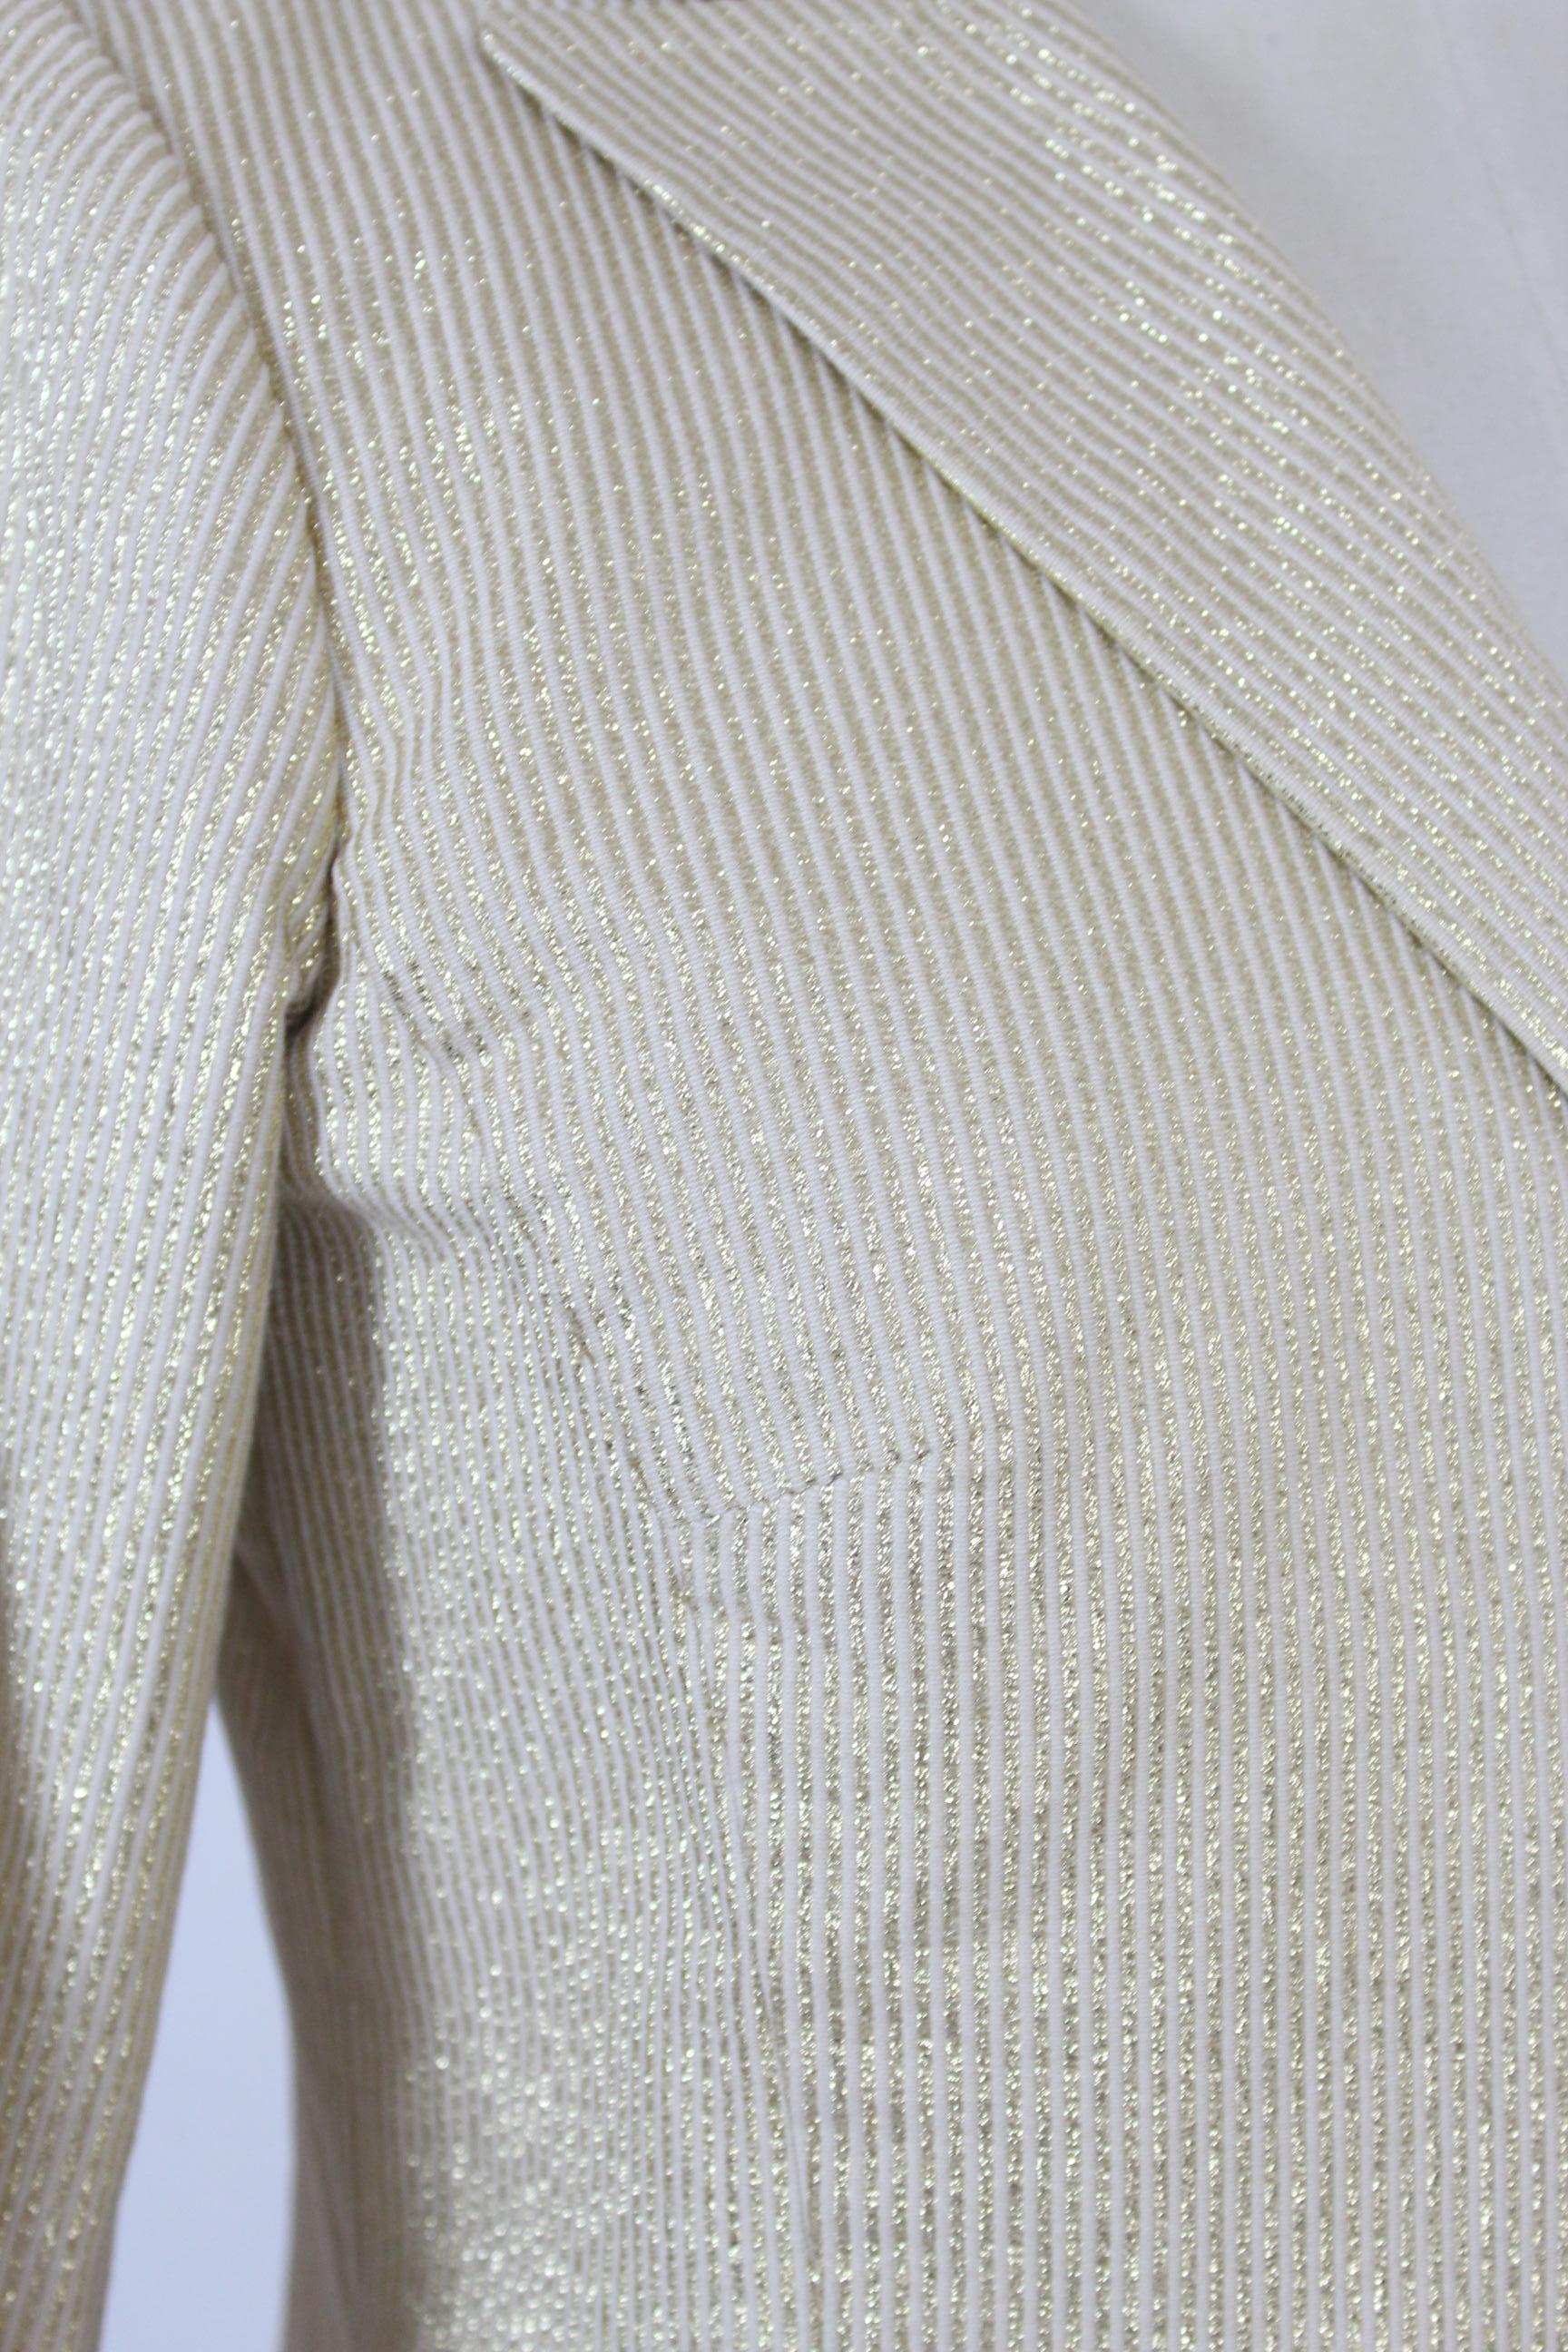 Etro Short Shiny Jacket Beige Gold Pinstripe Insert 3/4 Sleeves 2000s Cotton For Sale 1